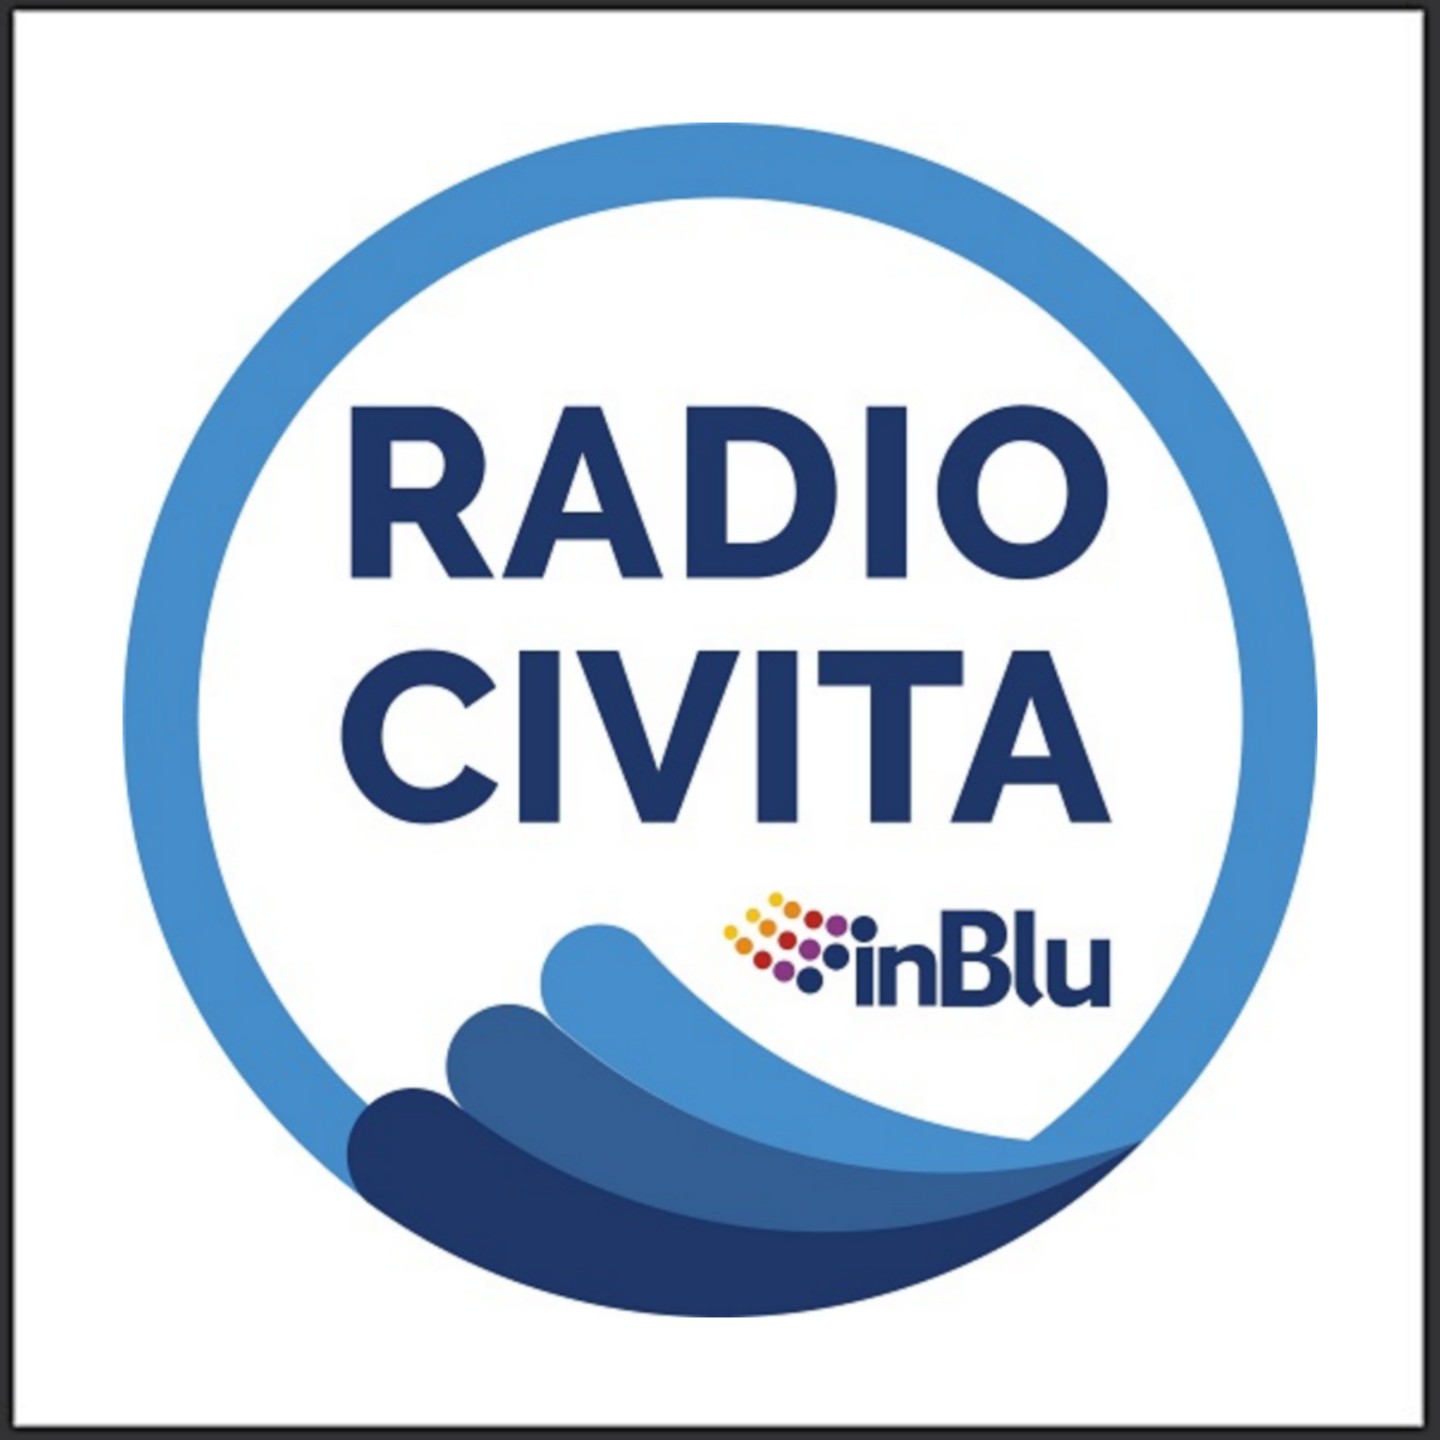 Radio Civita inblu